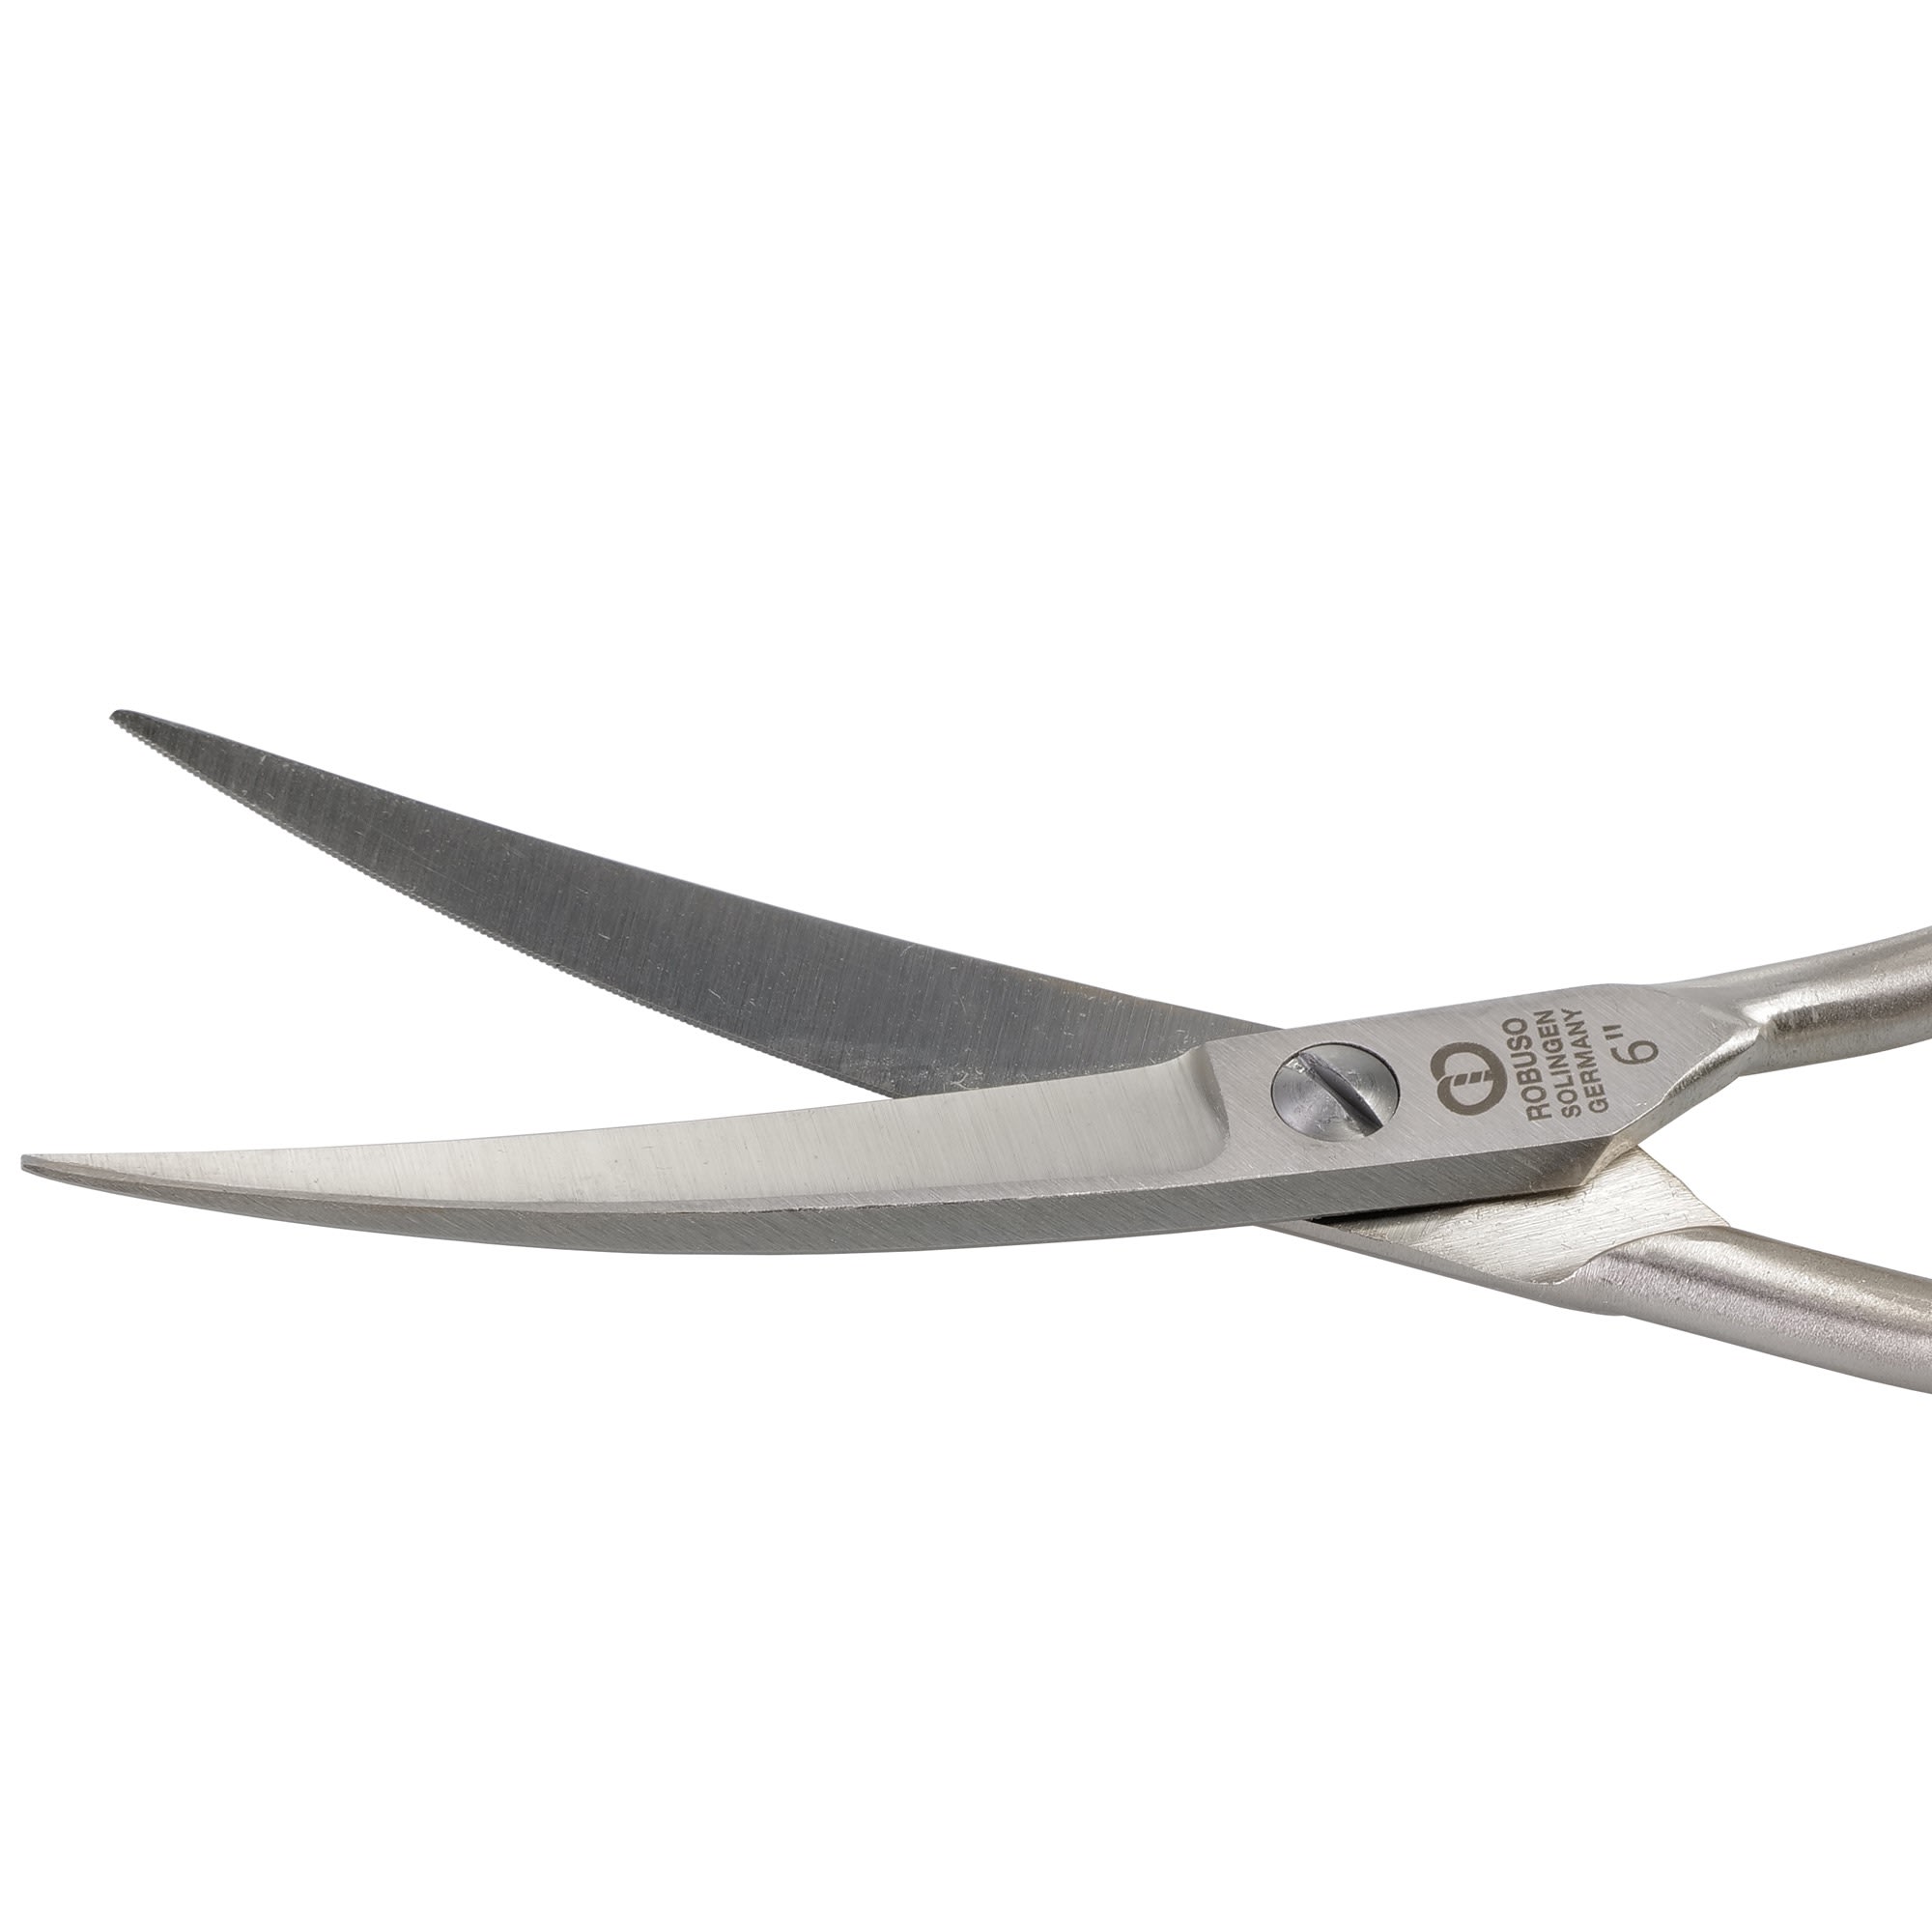 Fabric scissors curved (offset handles), 16 cm / 6" length, image 3